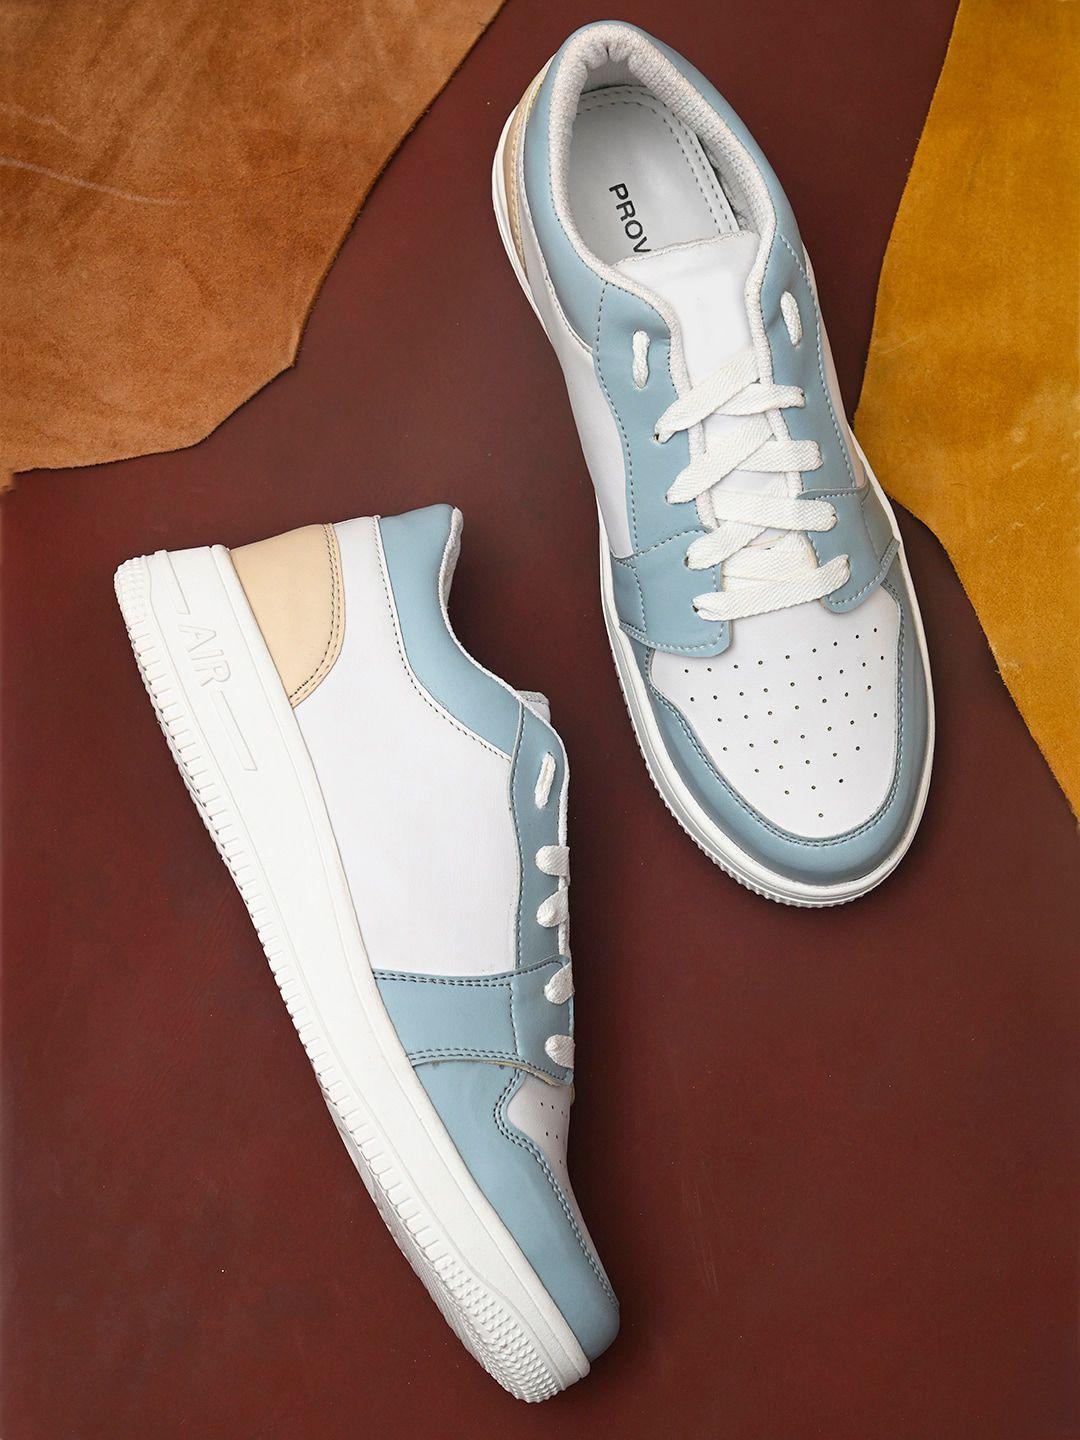 provogue-men-white-colourblocked-sneakers